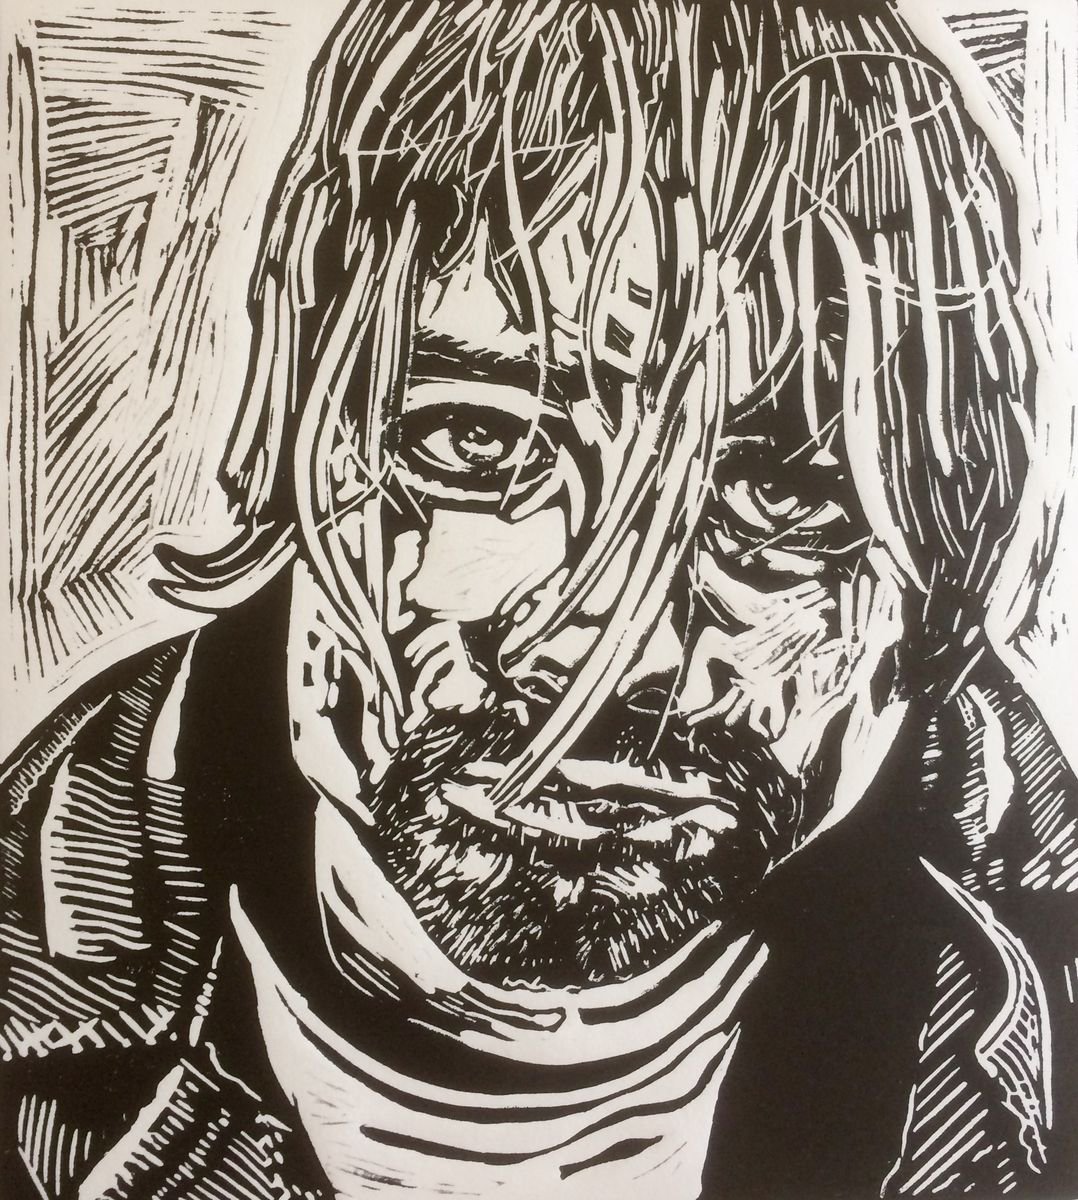 ’Kurt Cobain’ by Mark Murphy